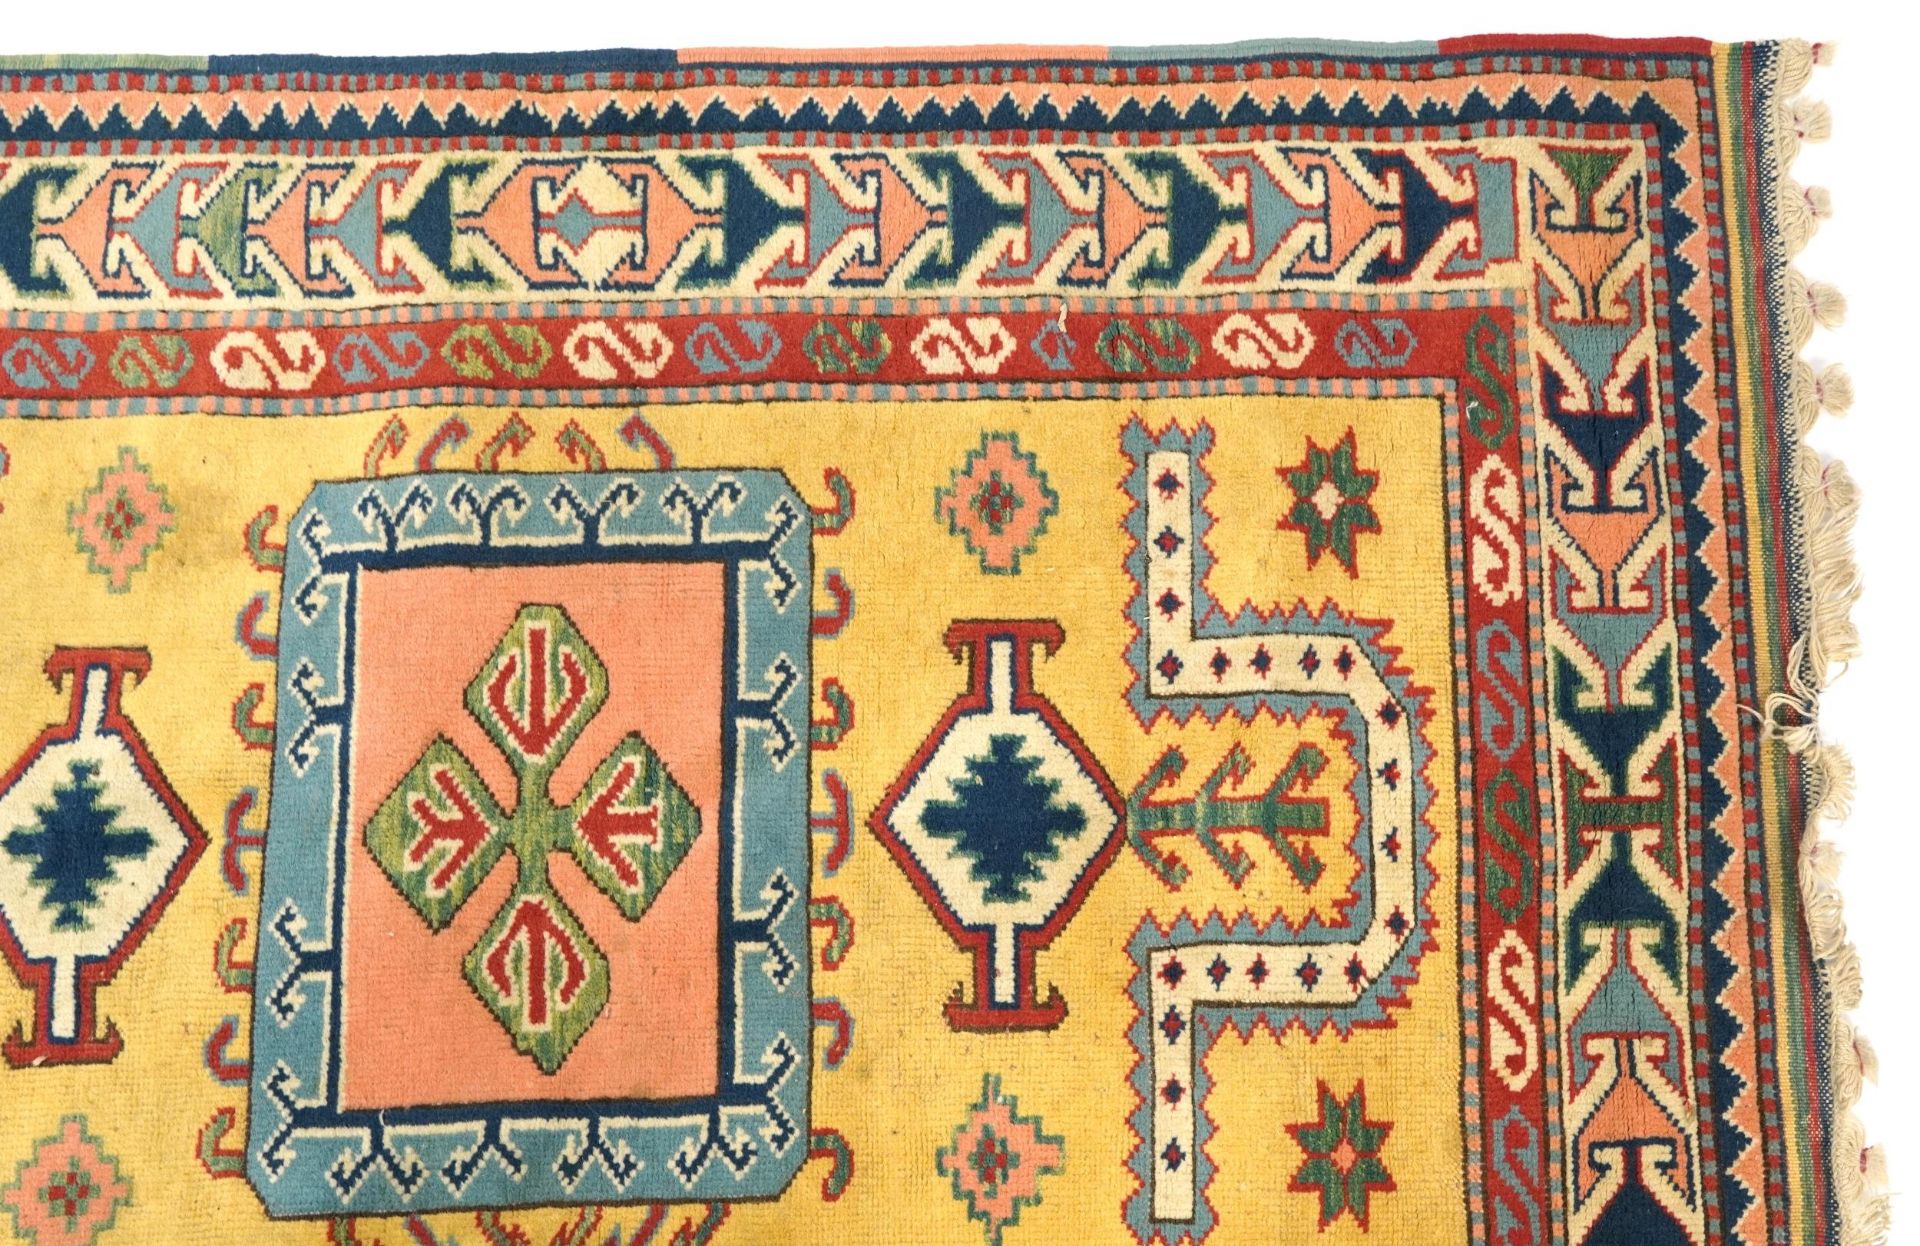 Rectangular Turkish kilim rug having and allover traditional design, 185cm x 125cm - Image 3 of 7